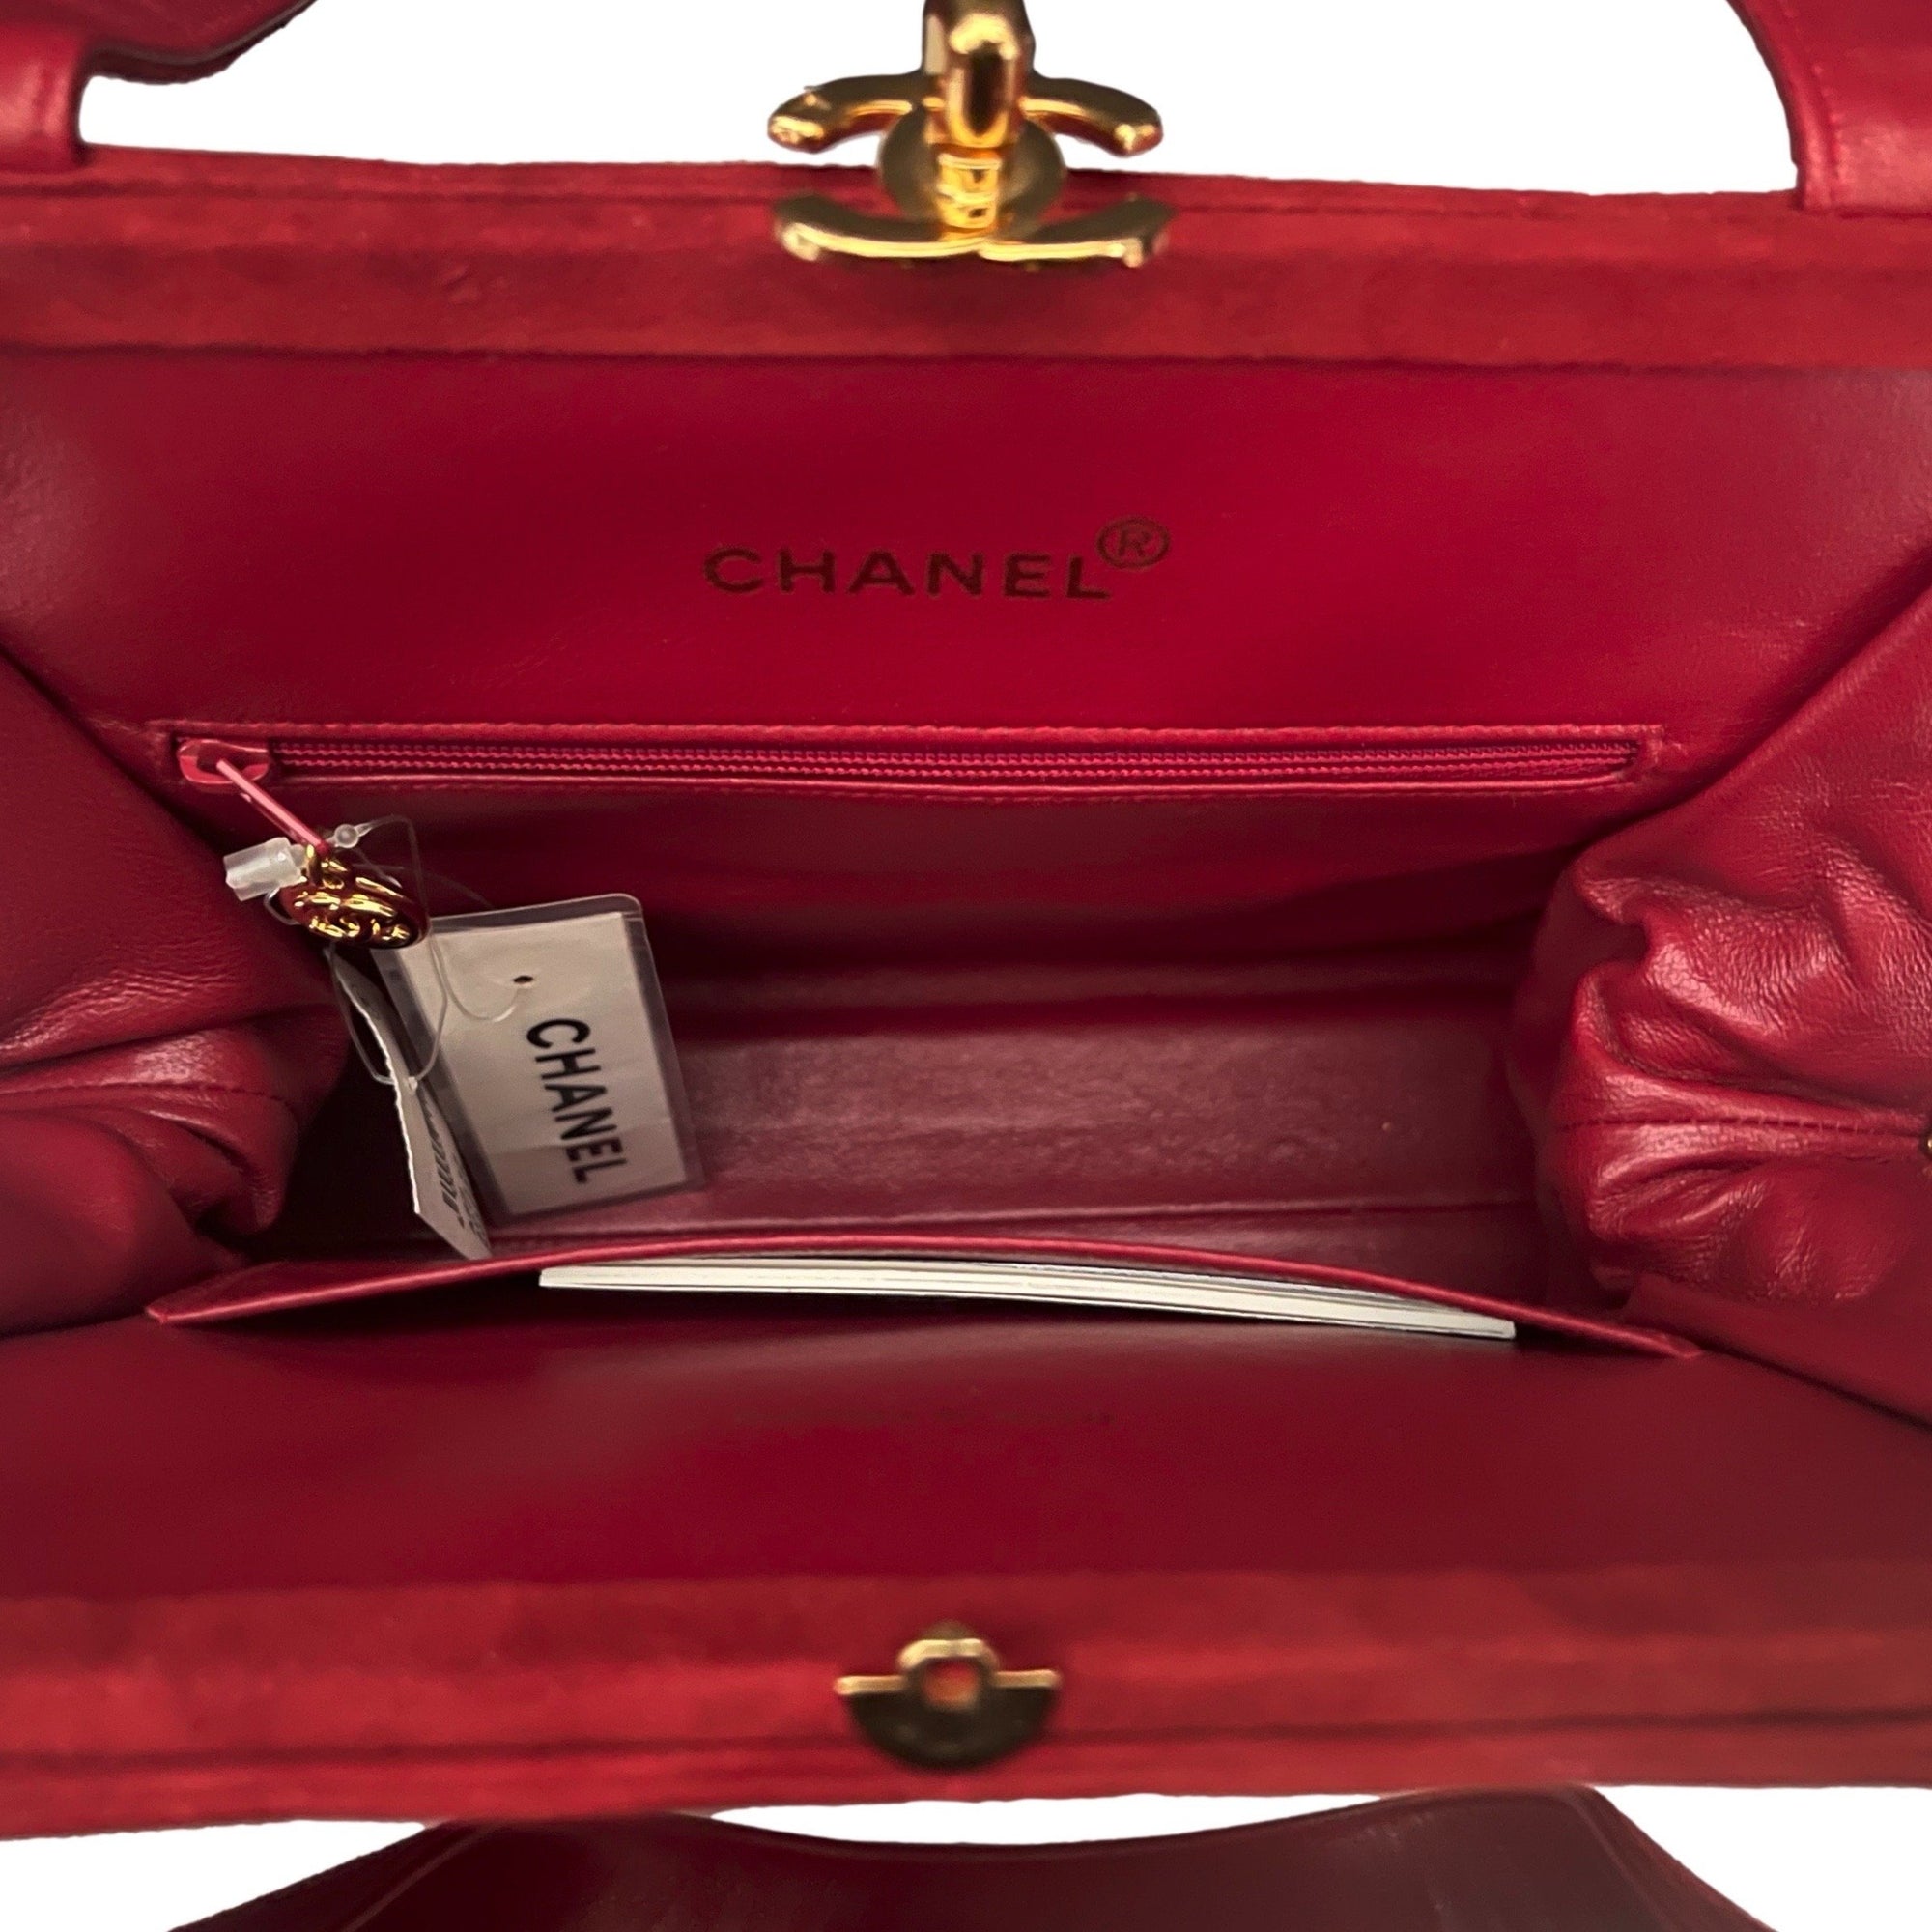 Chanel Red Suede Turnlock Bag - Handbags